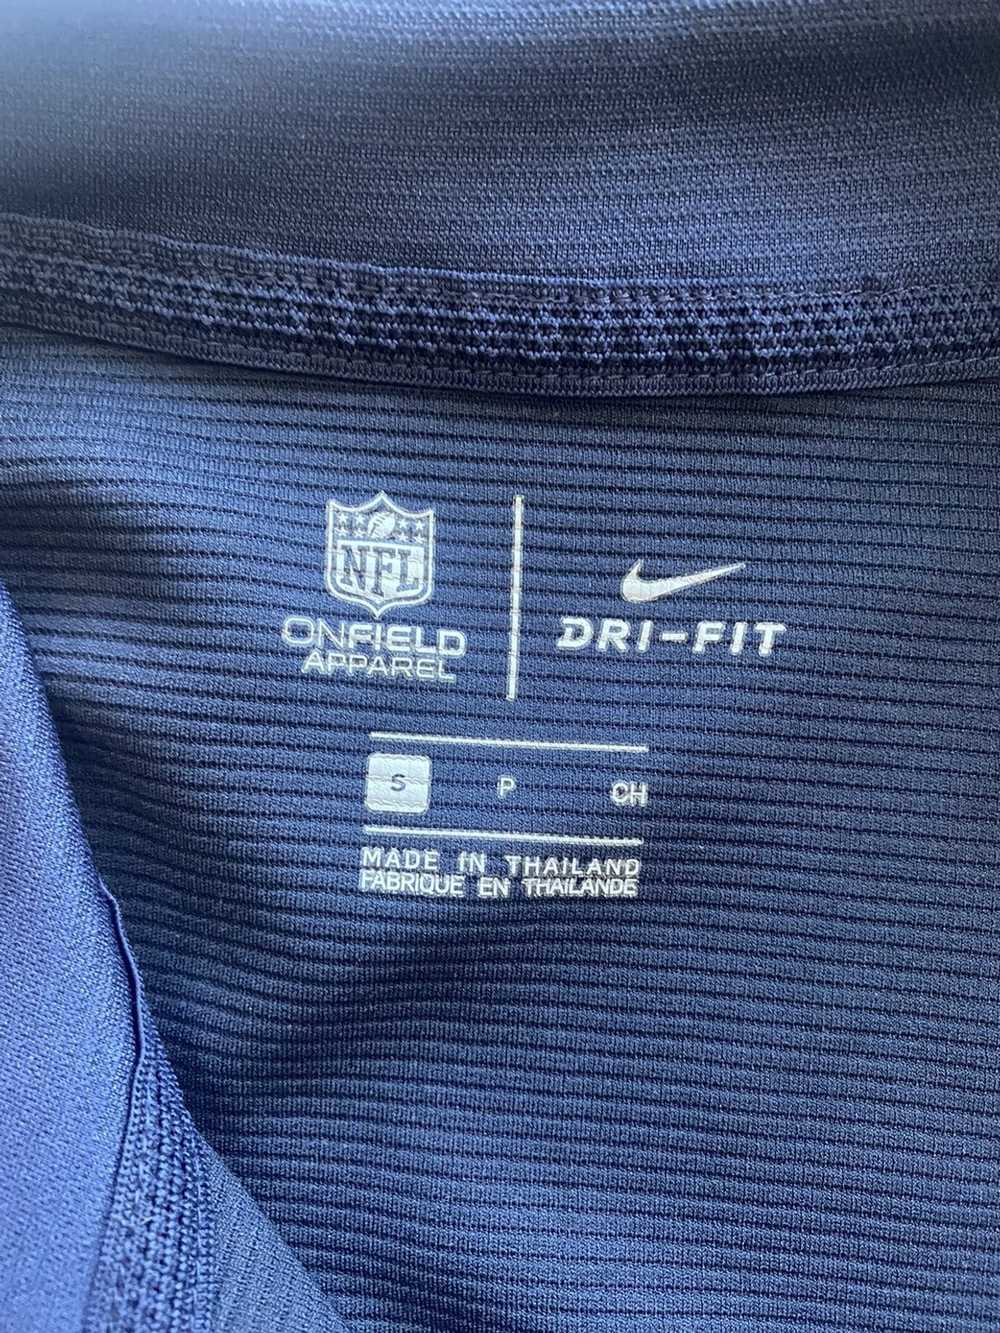 Nike Seattle Seahawks Nike Quarter-Zip Jacket - image 4